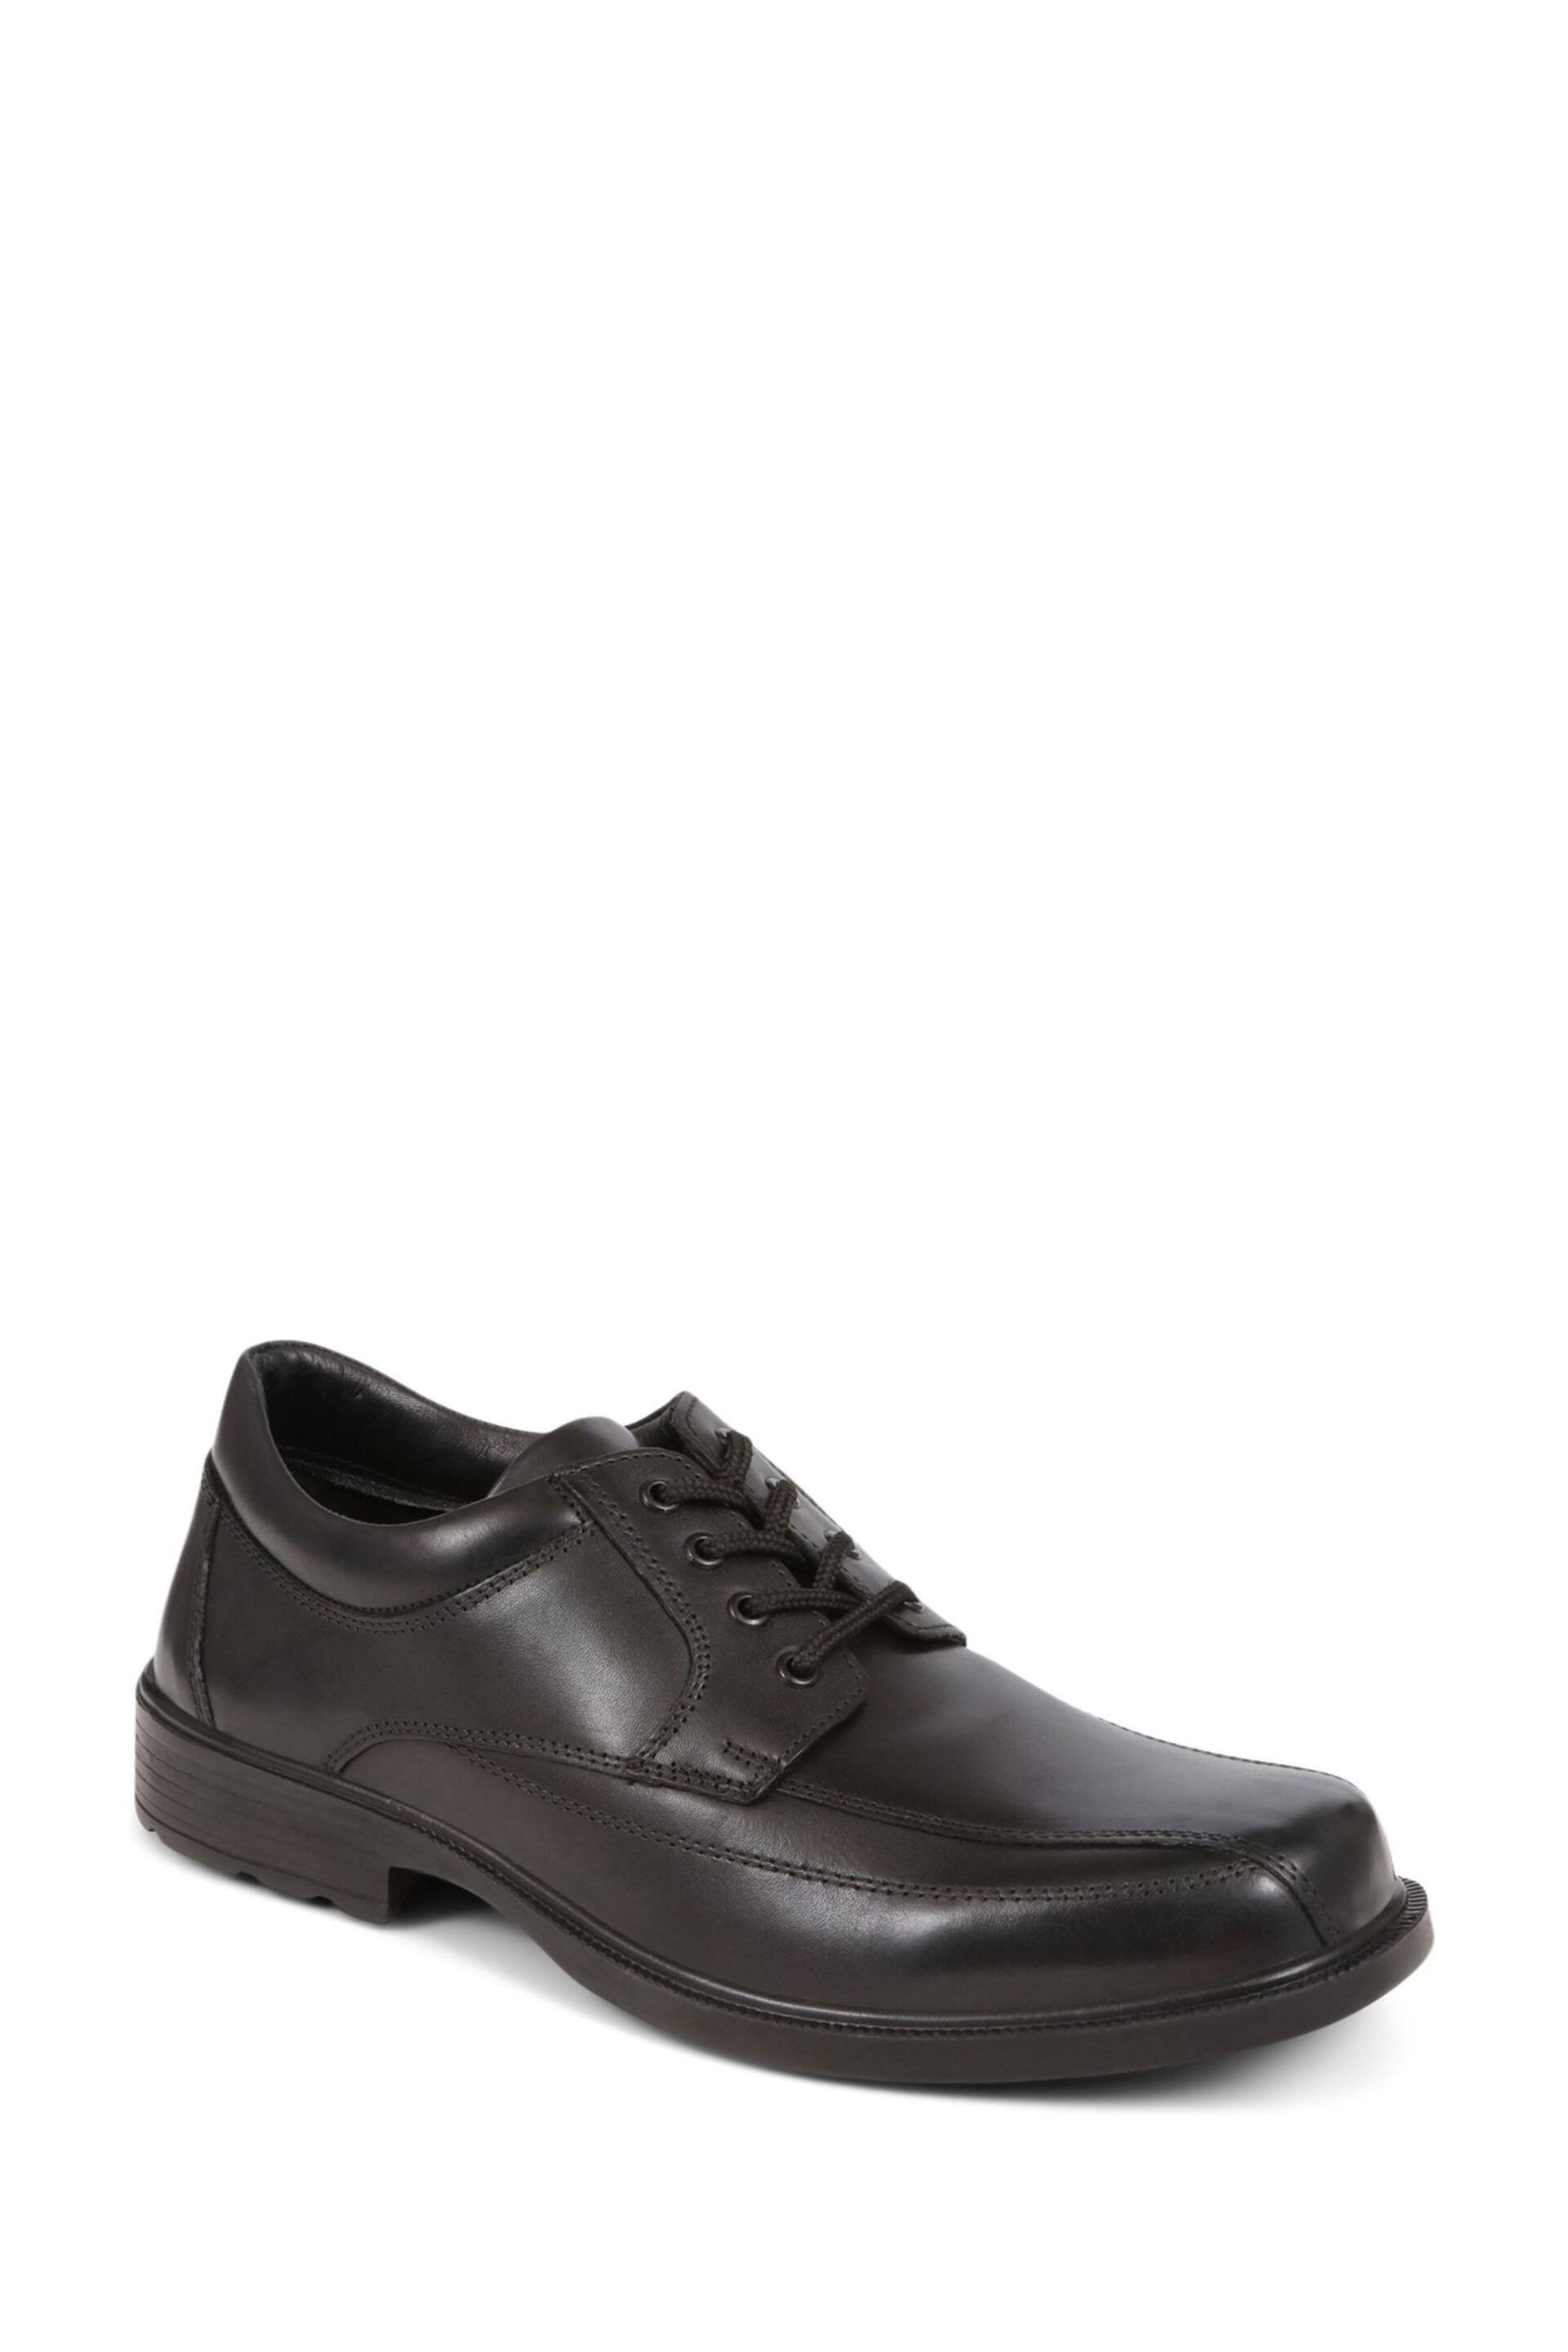 Pavers Lace-Up Smart Black Shoes - Image 1 of 5